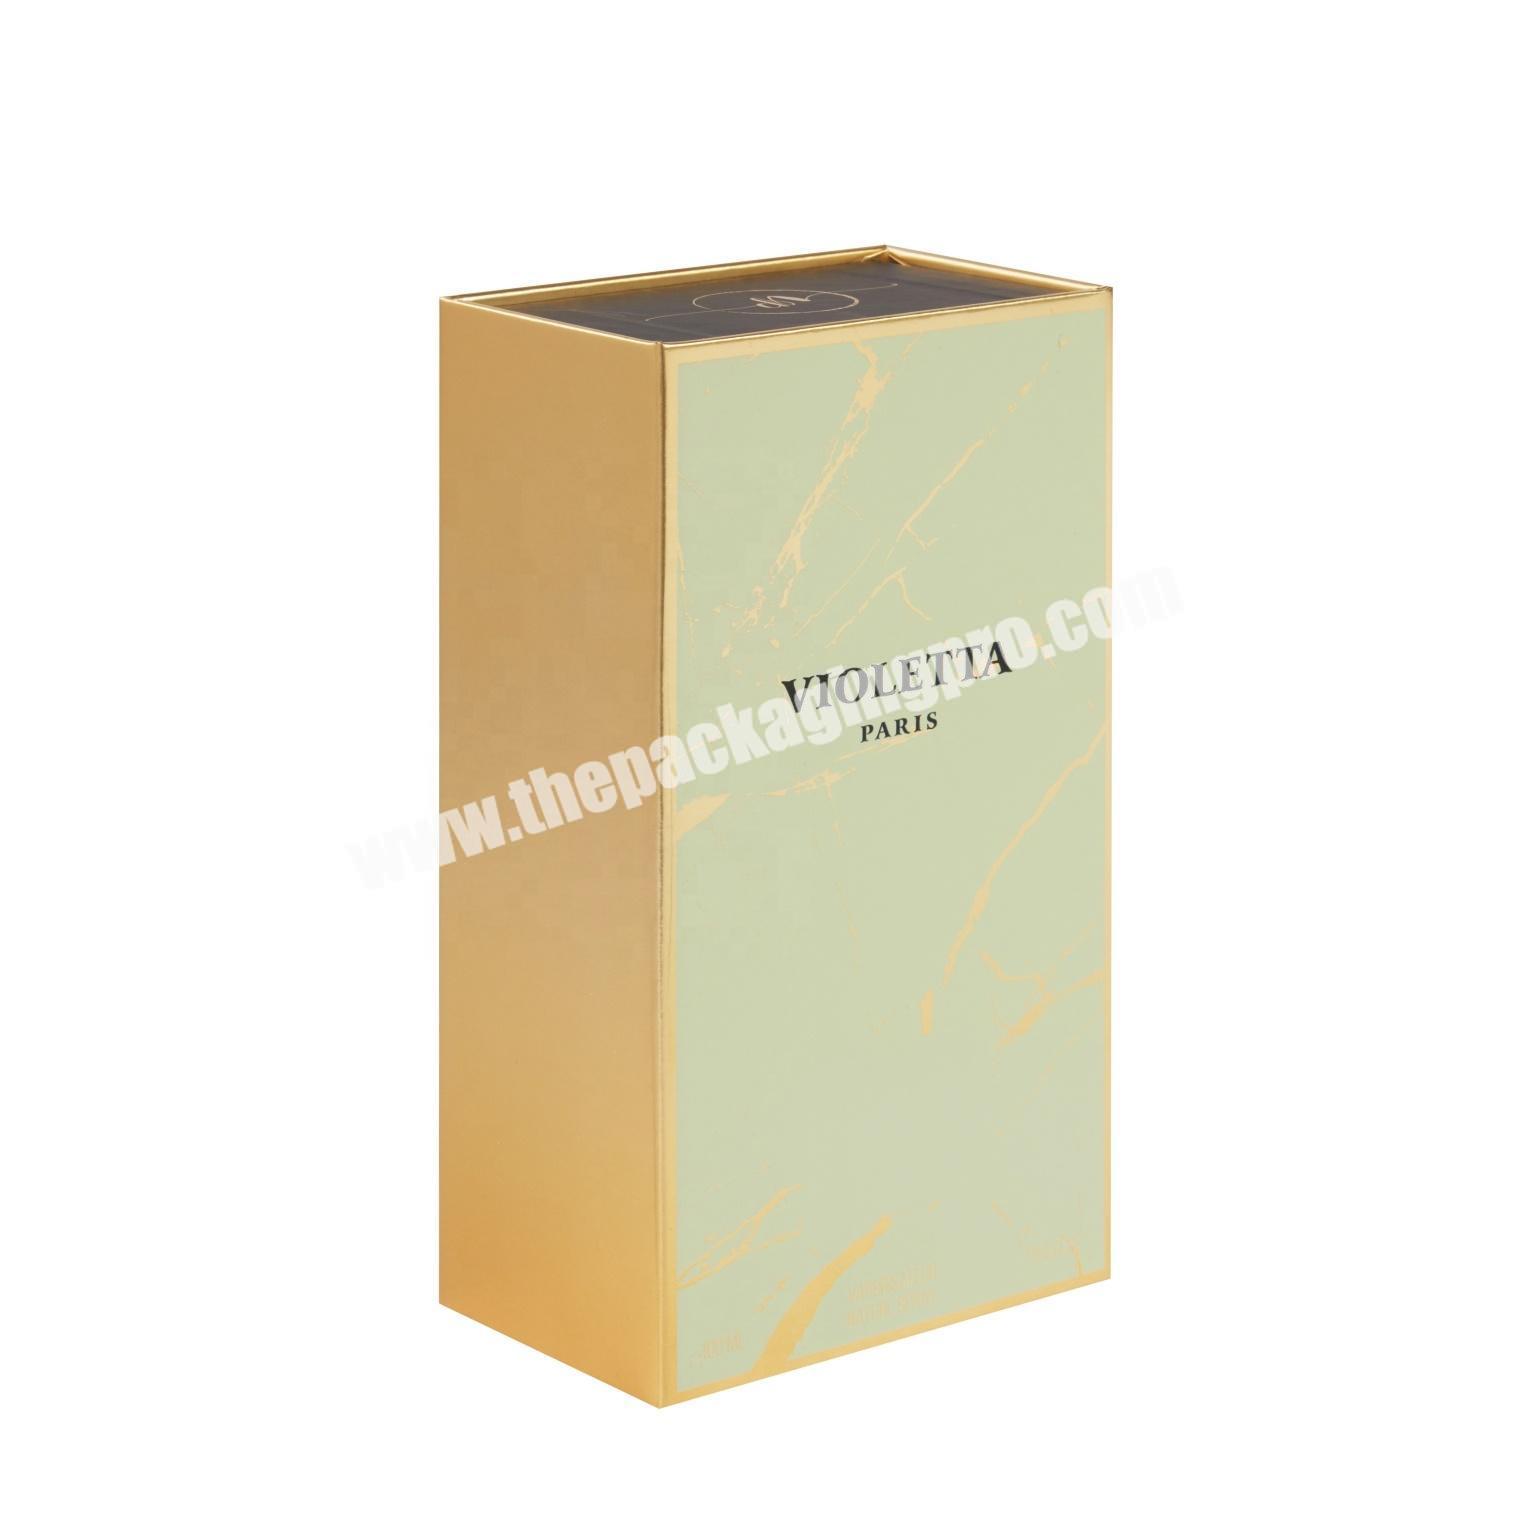 Low-key luxury and distinctive VP logo perfume  gift display boxes